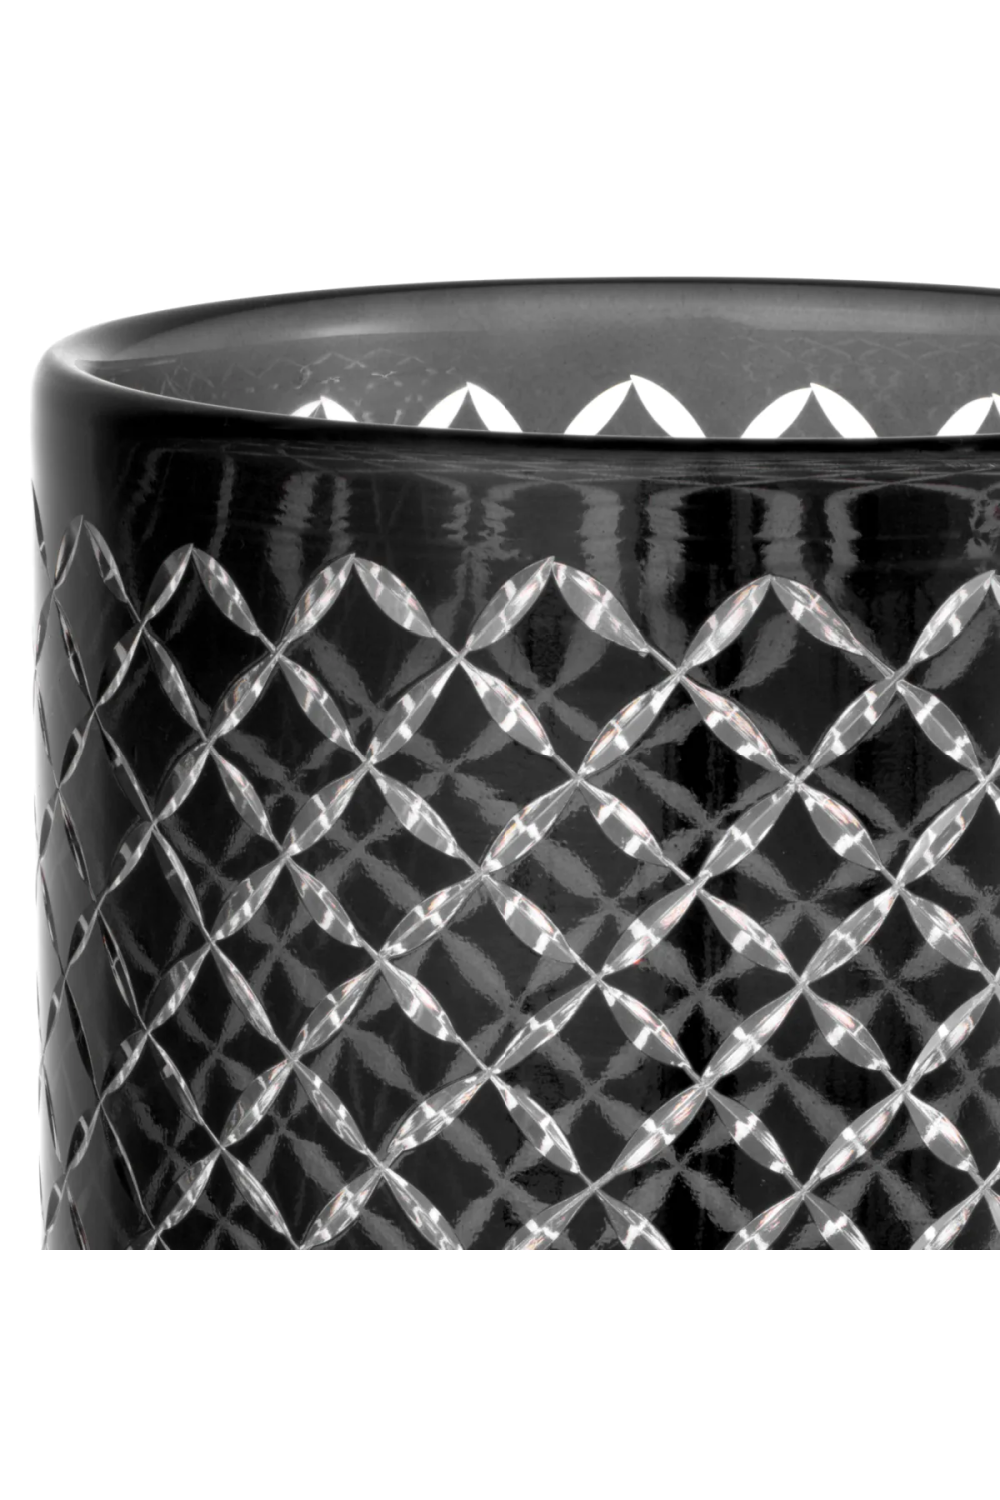 Diamond Patterned Cylindrical Hurricane | Eichholtz Gable | Oroa.com